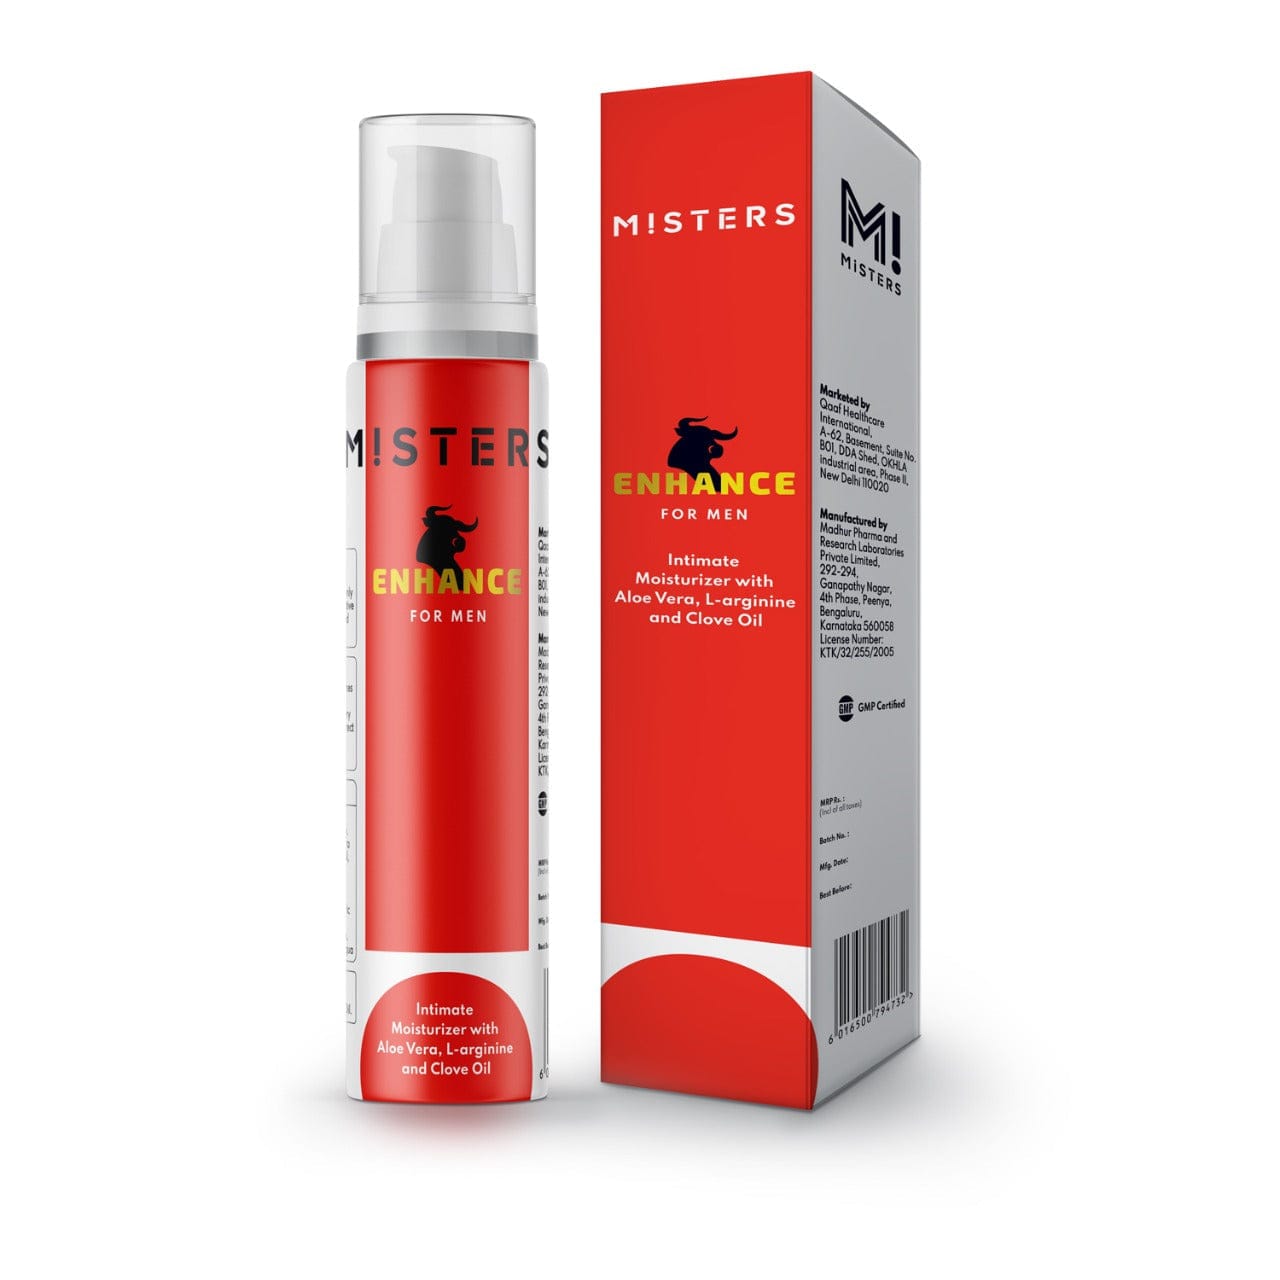 Misters Misters Enhance Intimate Moisturizer Cream with Aloe Vera & L-arginine and Clove Oil for Men - 50g